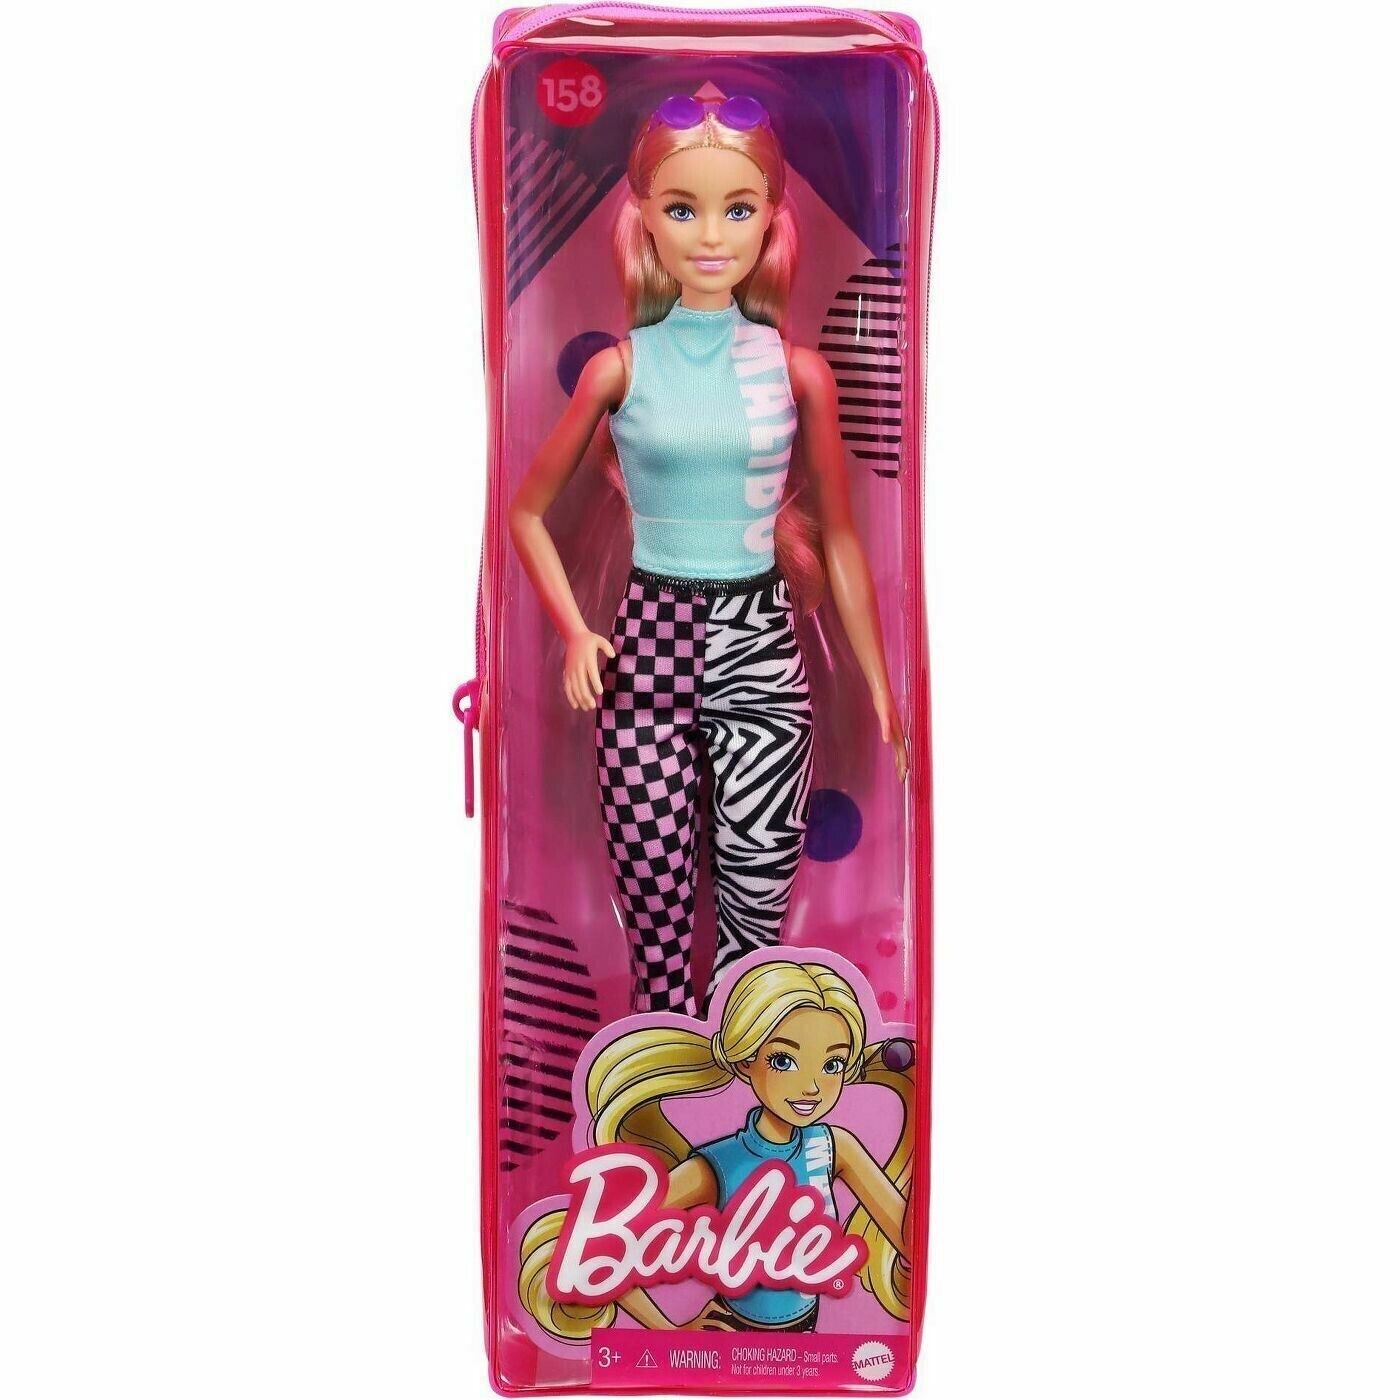 Barbie Fashionistas Doll #158 Malibu - GRB50